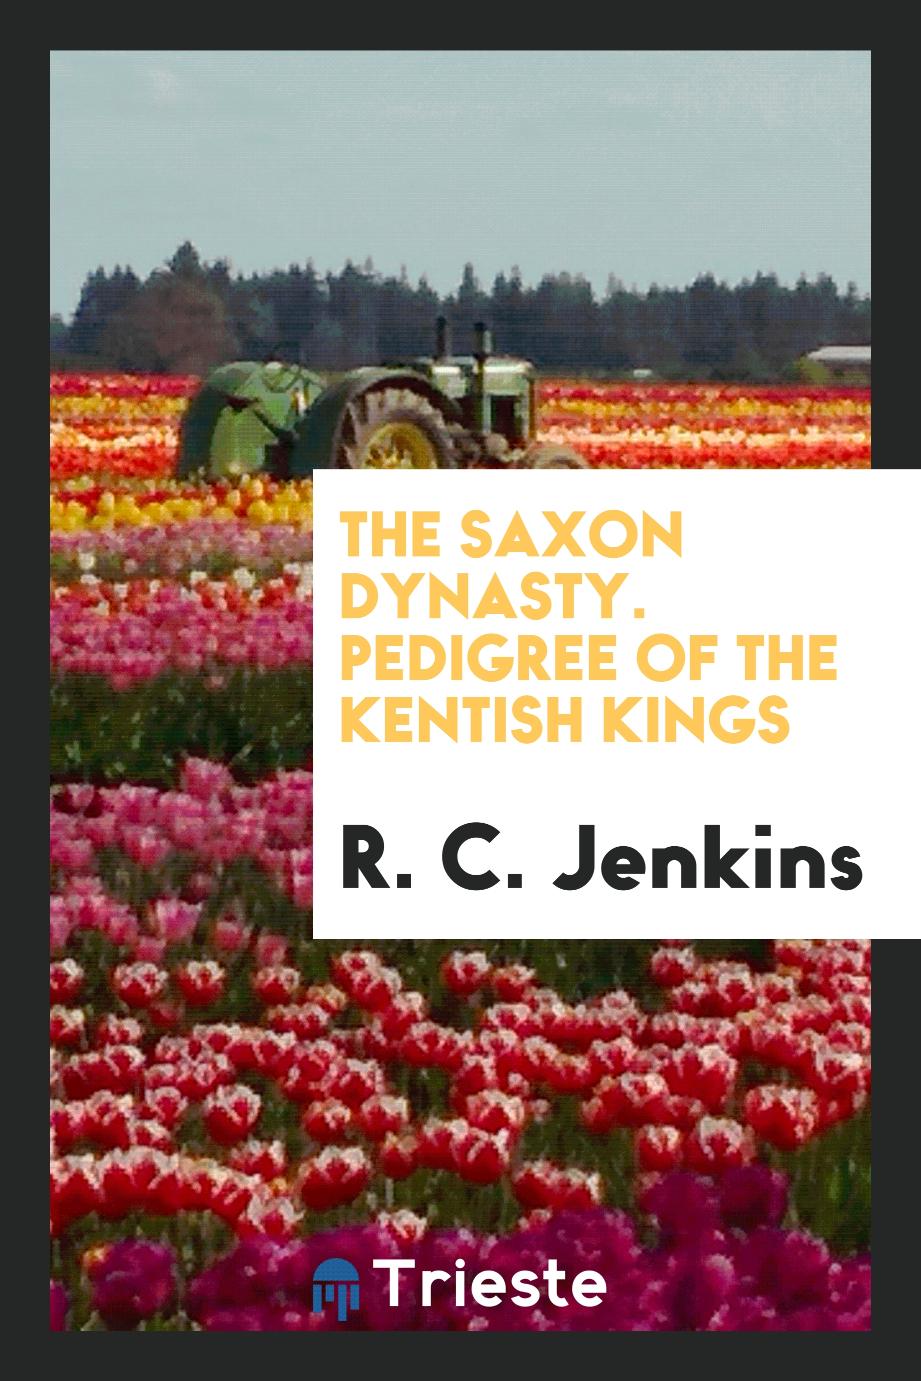 The Saxon dynasty. Pedigree of the Kentish kings